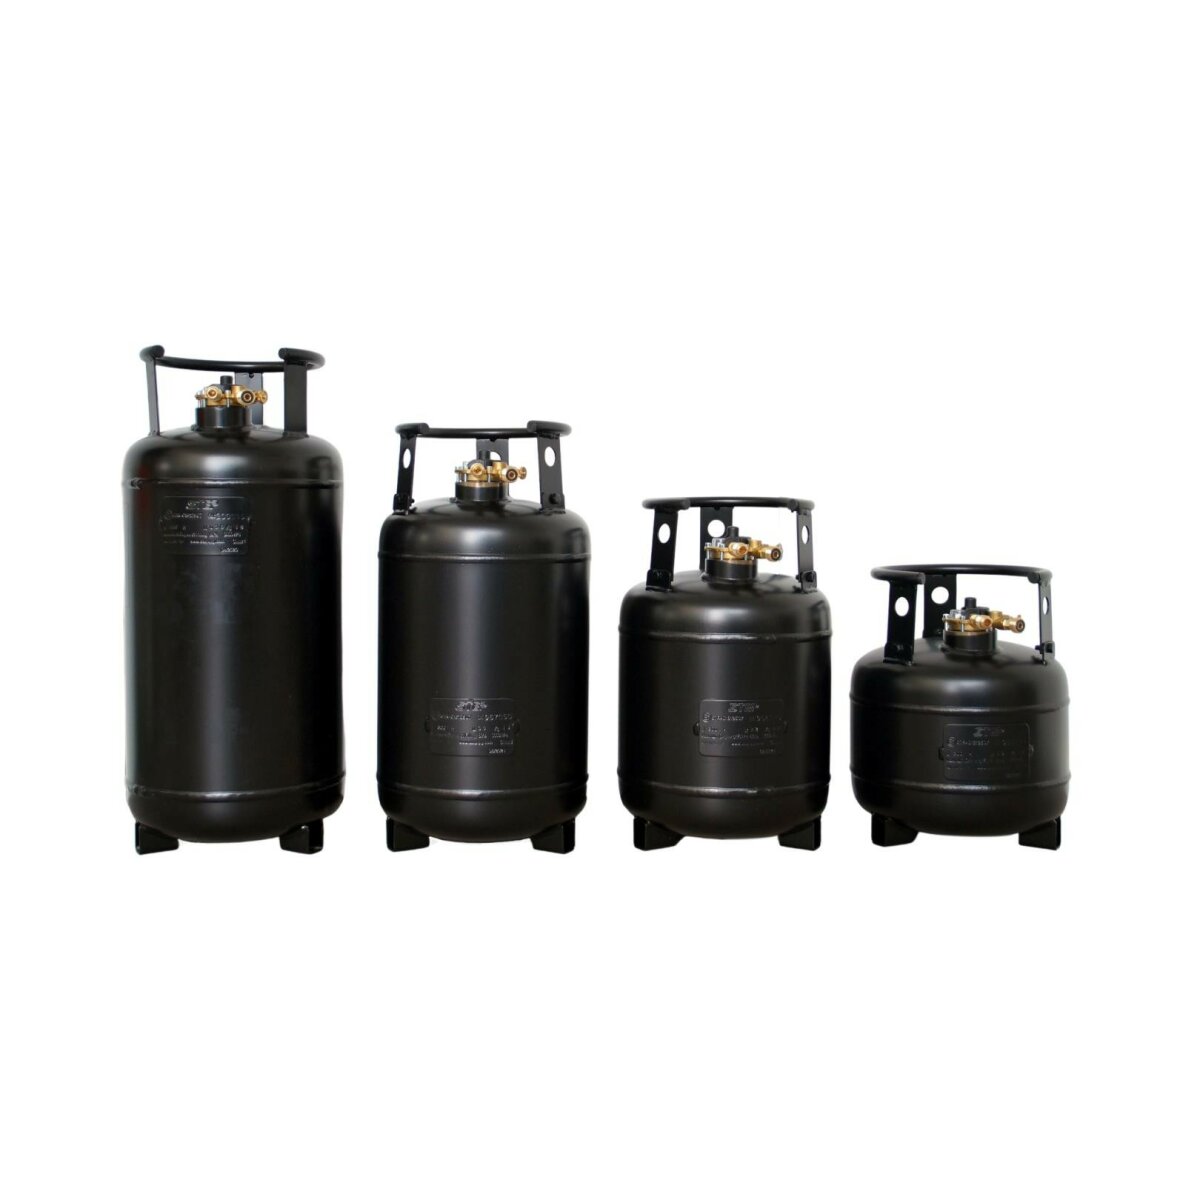 https://www.lpgparts24.de/media/image/product/7684/lg/tankflasche-36-liter-mit-80-multiventil.jpg